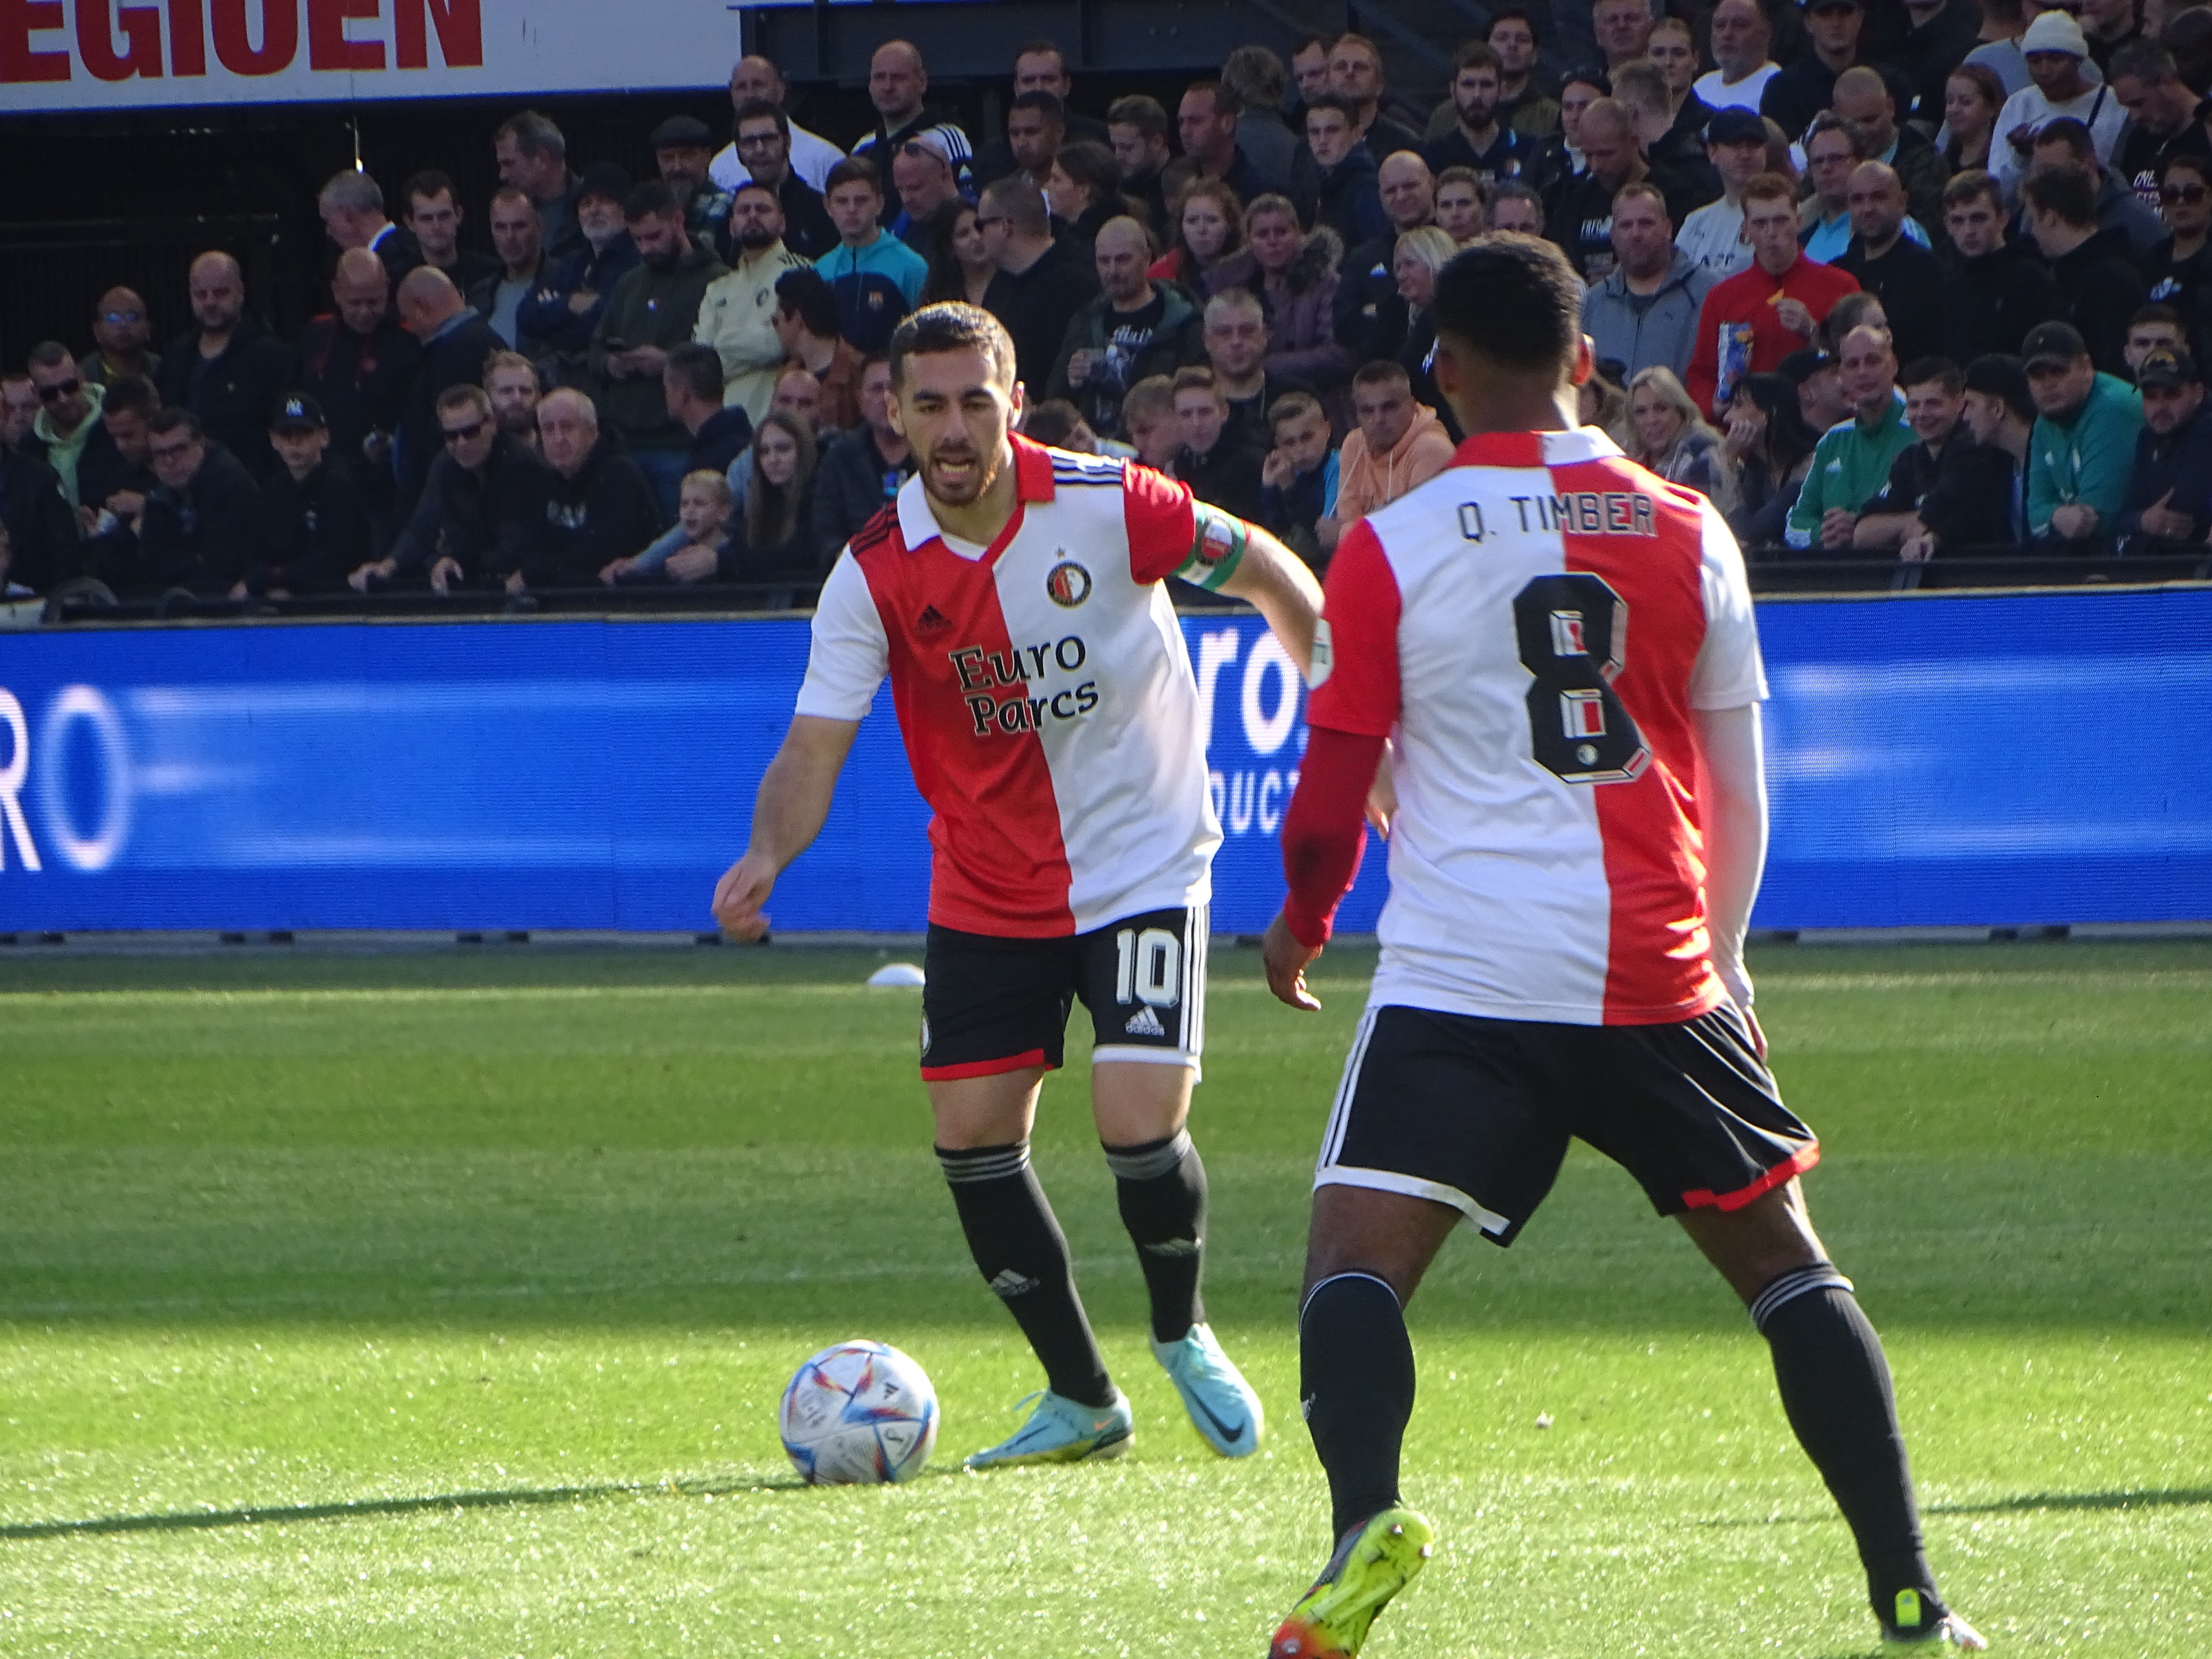 NEXT MATCH - Feyenoord ontvangt herboren Fortuna Sittard in de Kuip